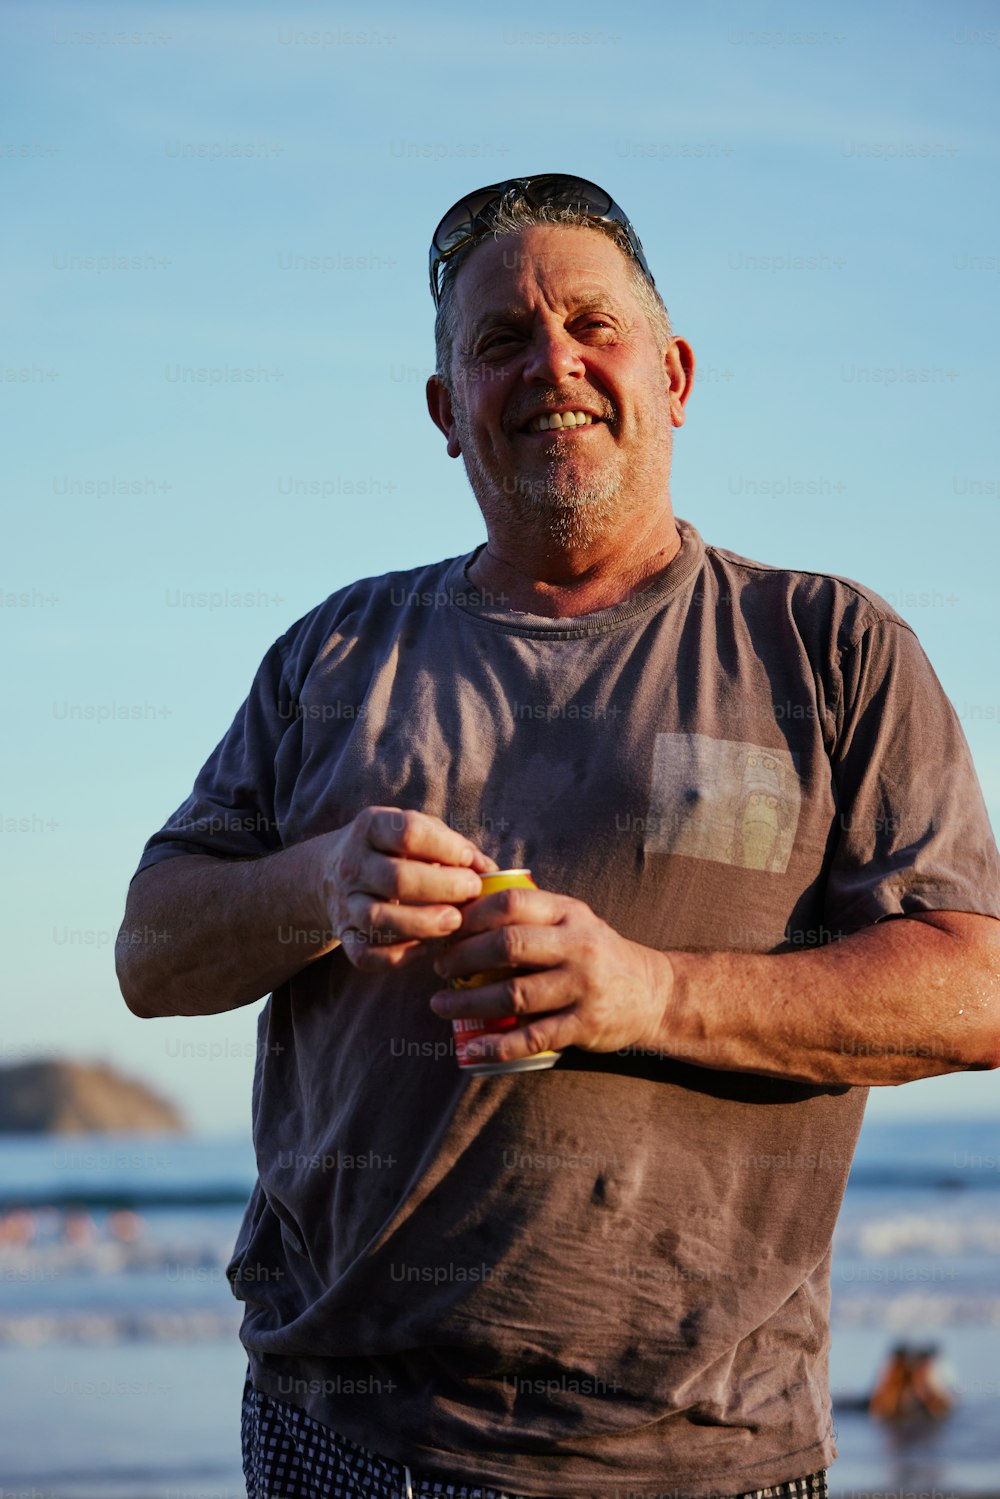 a man standing on a beach holding a frisbee